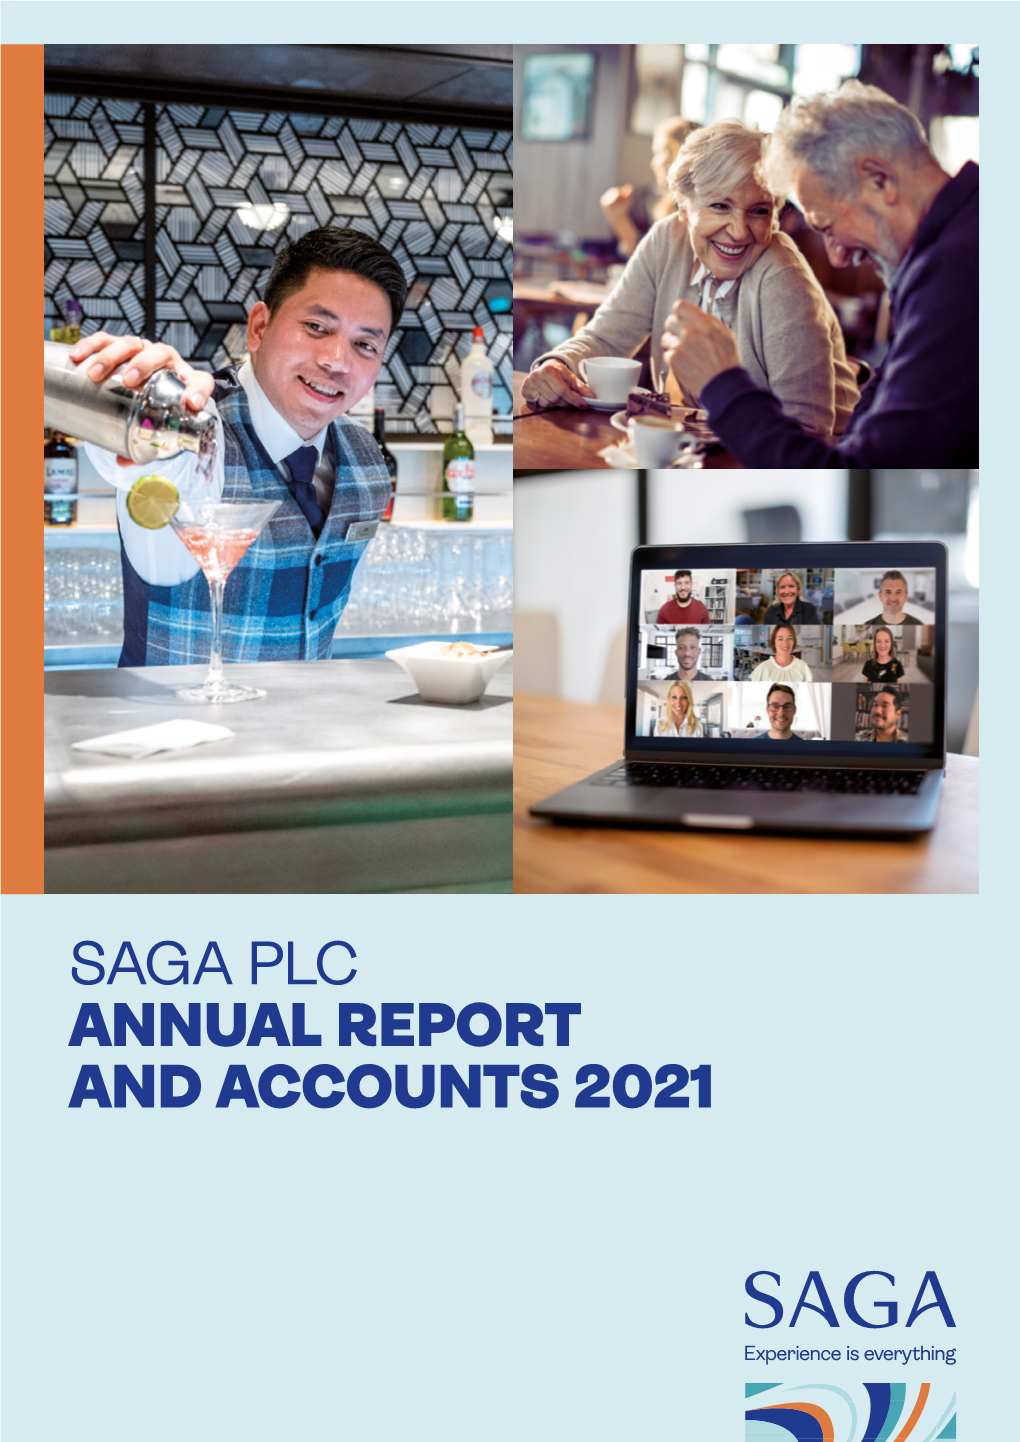 Saga Plc Annual Report and Accounts 2021